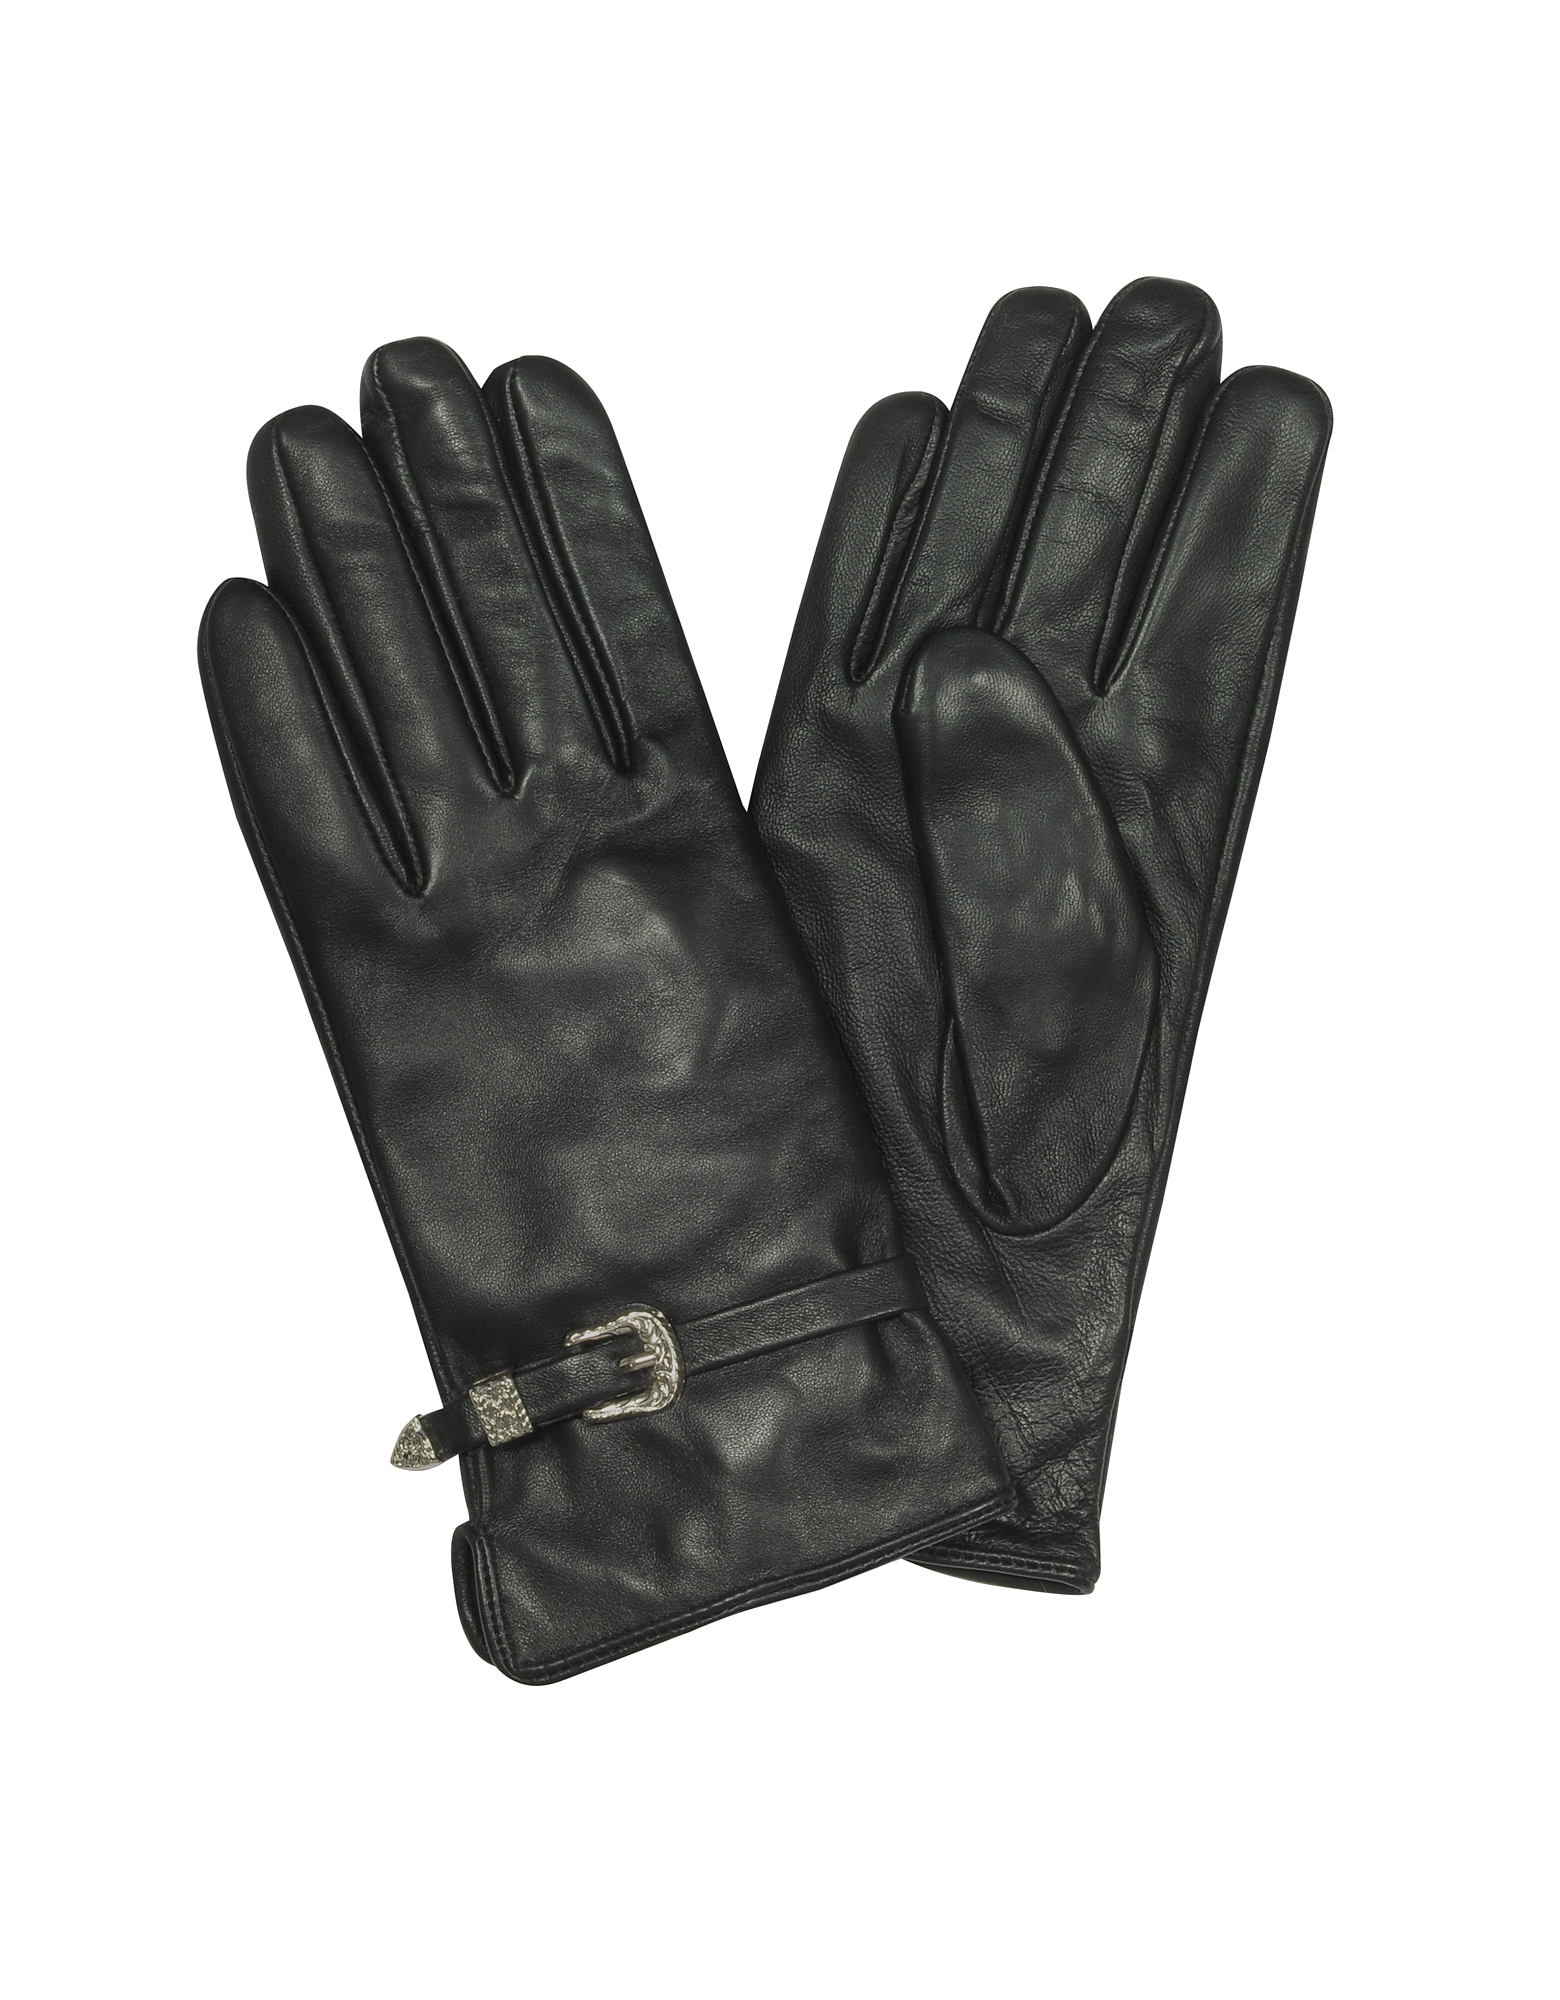 Roccobarocco Women's Gloves Biryani Black Leather Women's Gloves w/Buckles